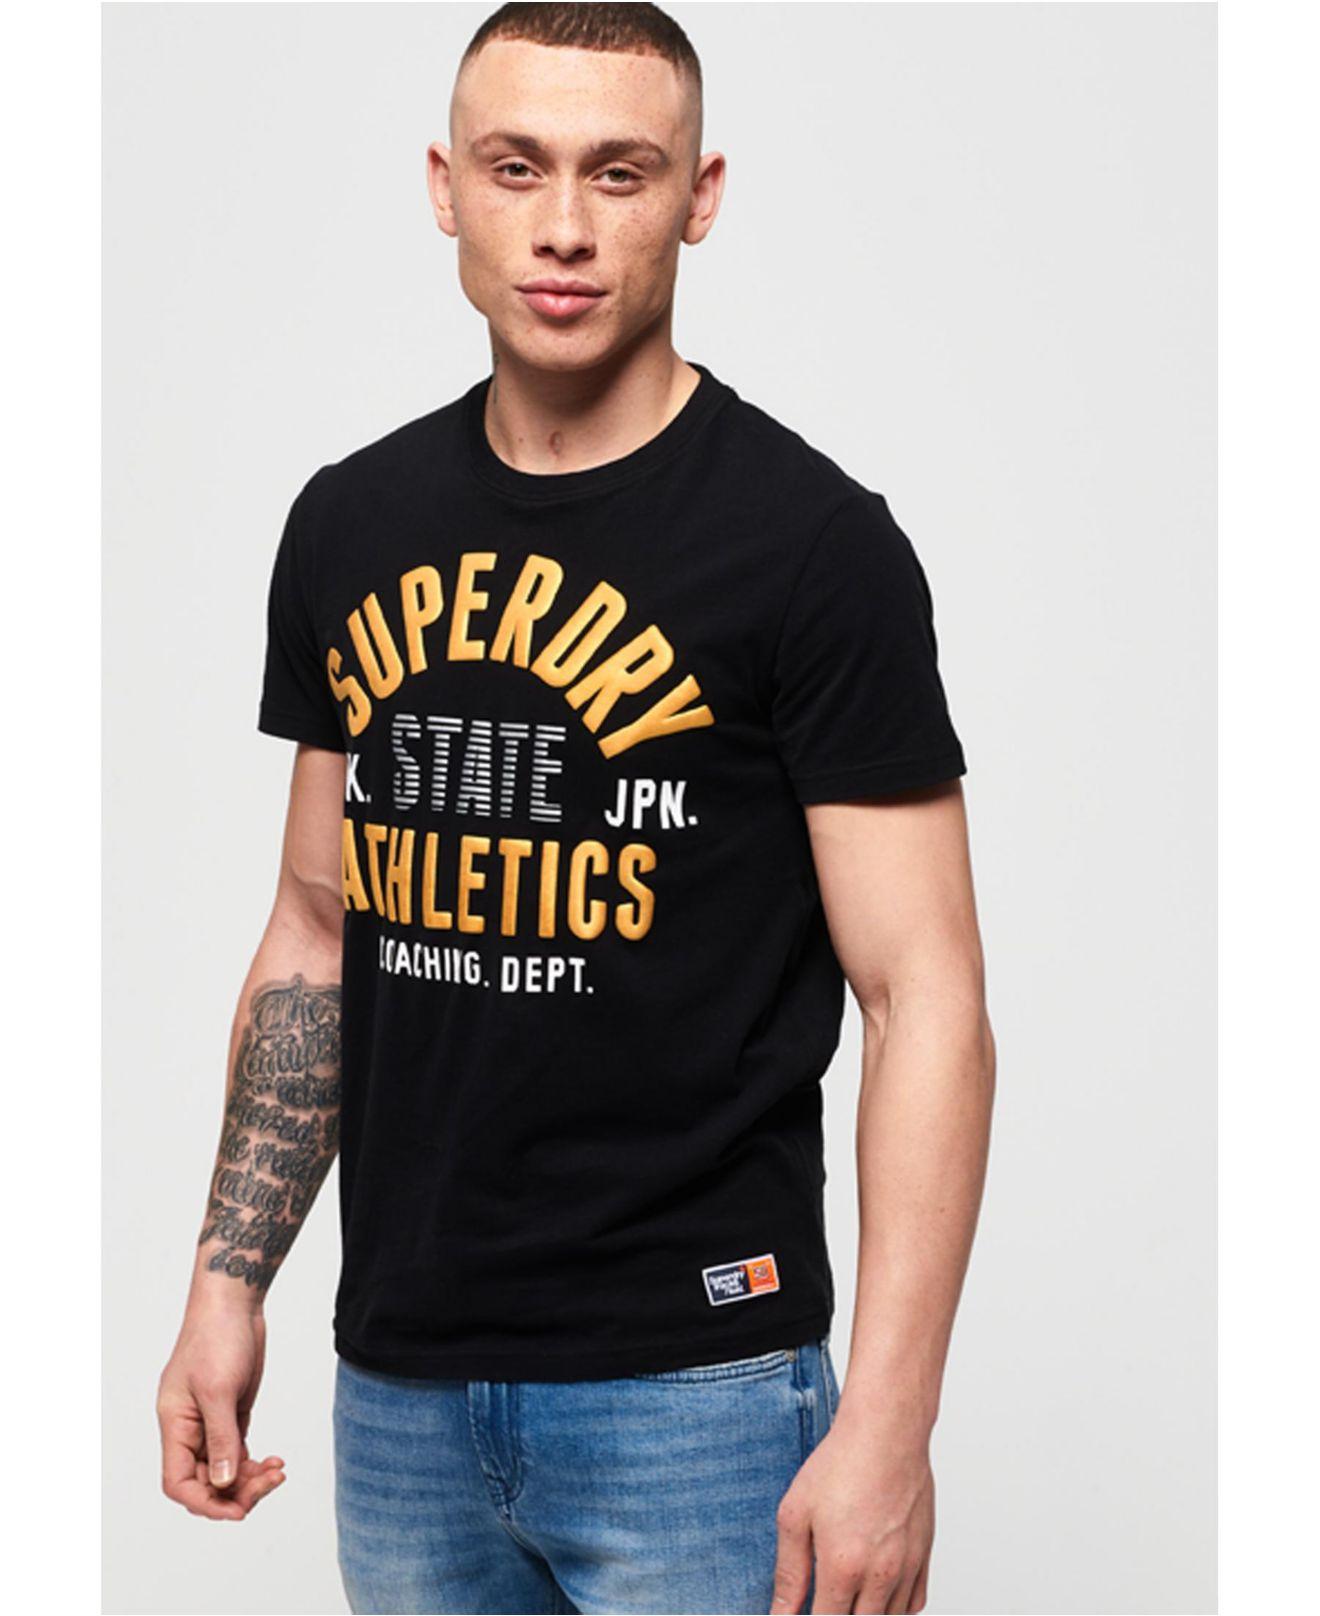 Superdry Denim Track & Field Lite Metallic T-shirt in Black for Men - Lyst